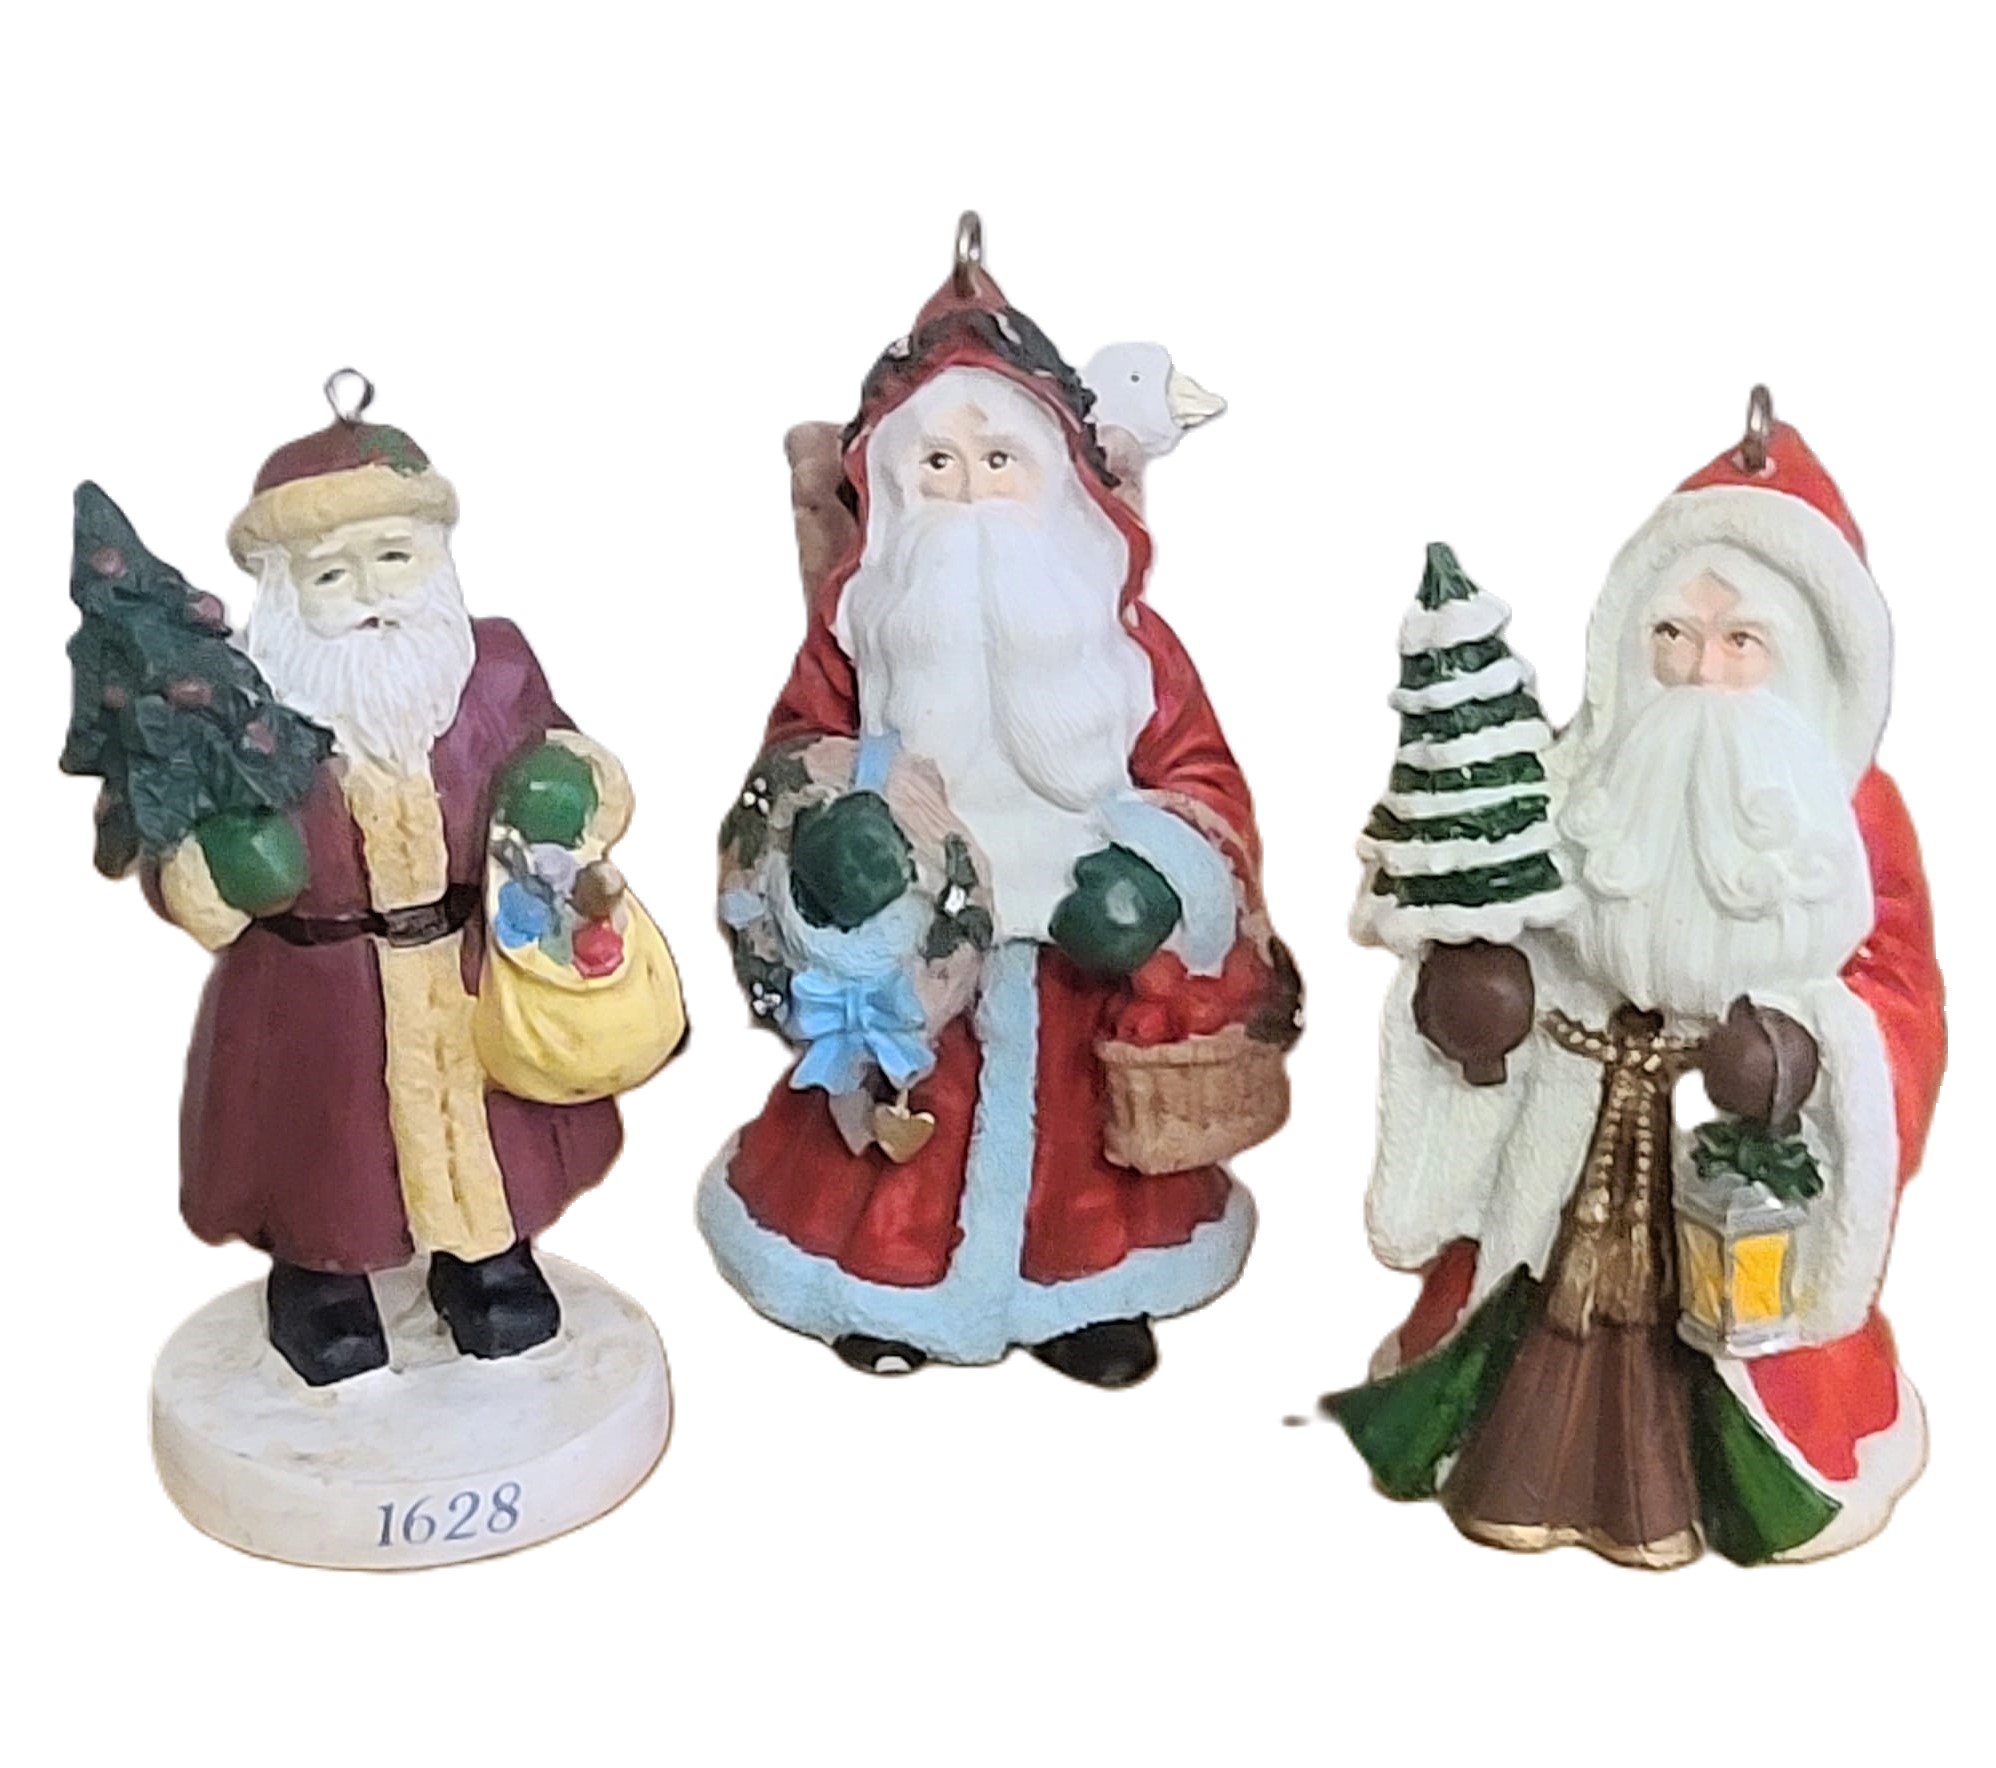 Vintage 1989 ceramic Santa ornaments Kurt Adler & Russ Set of 3